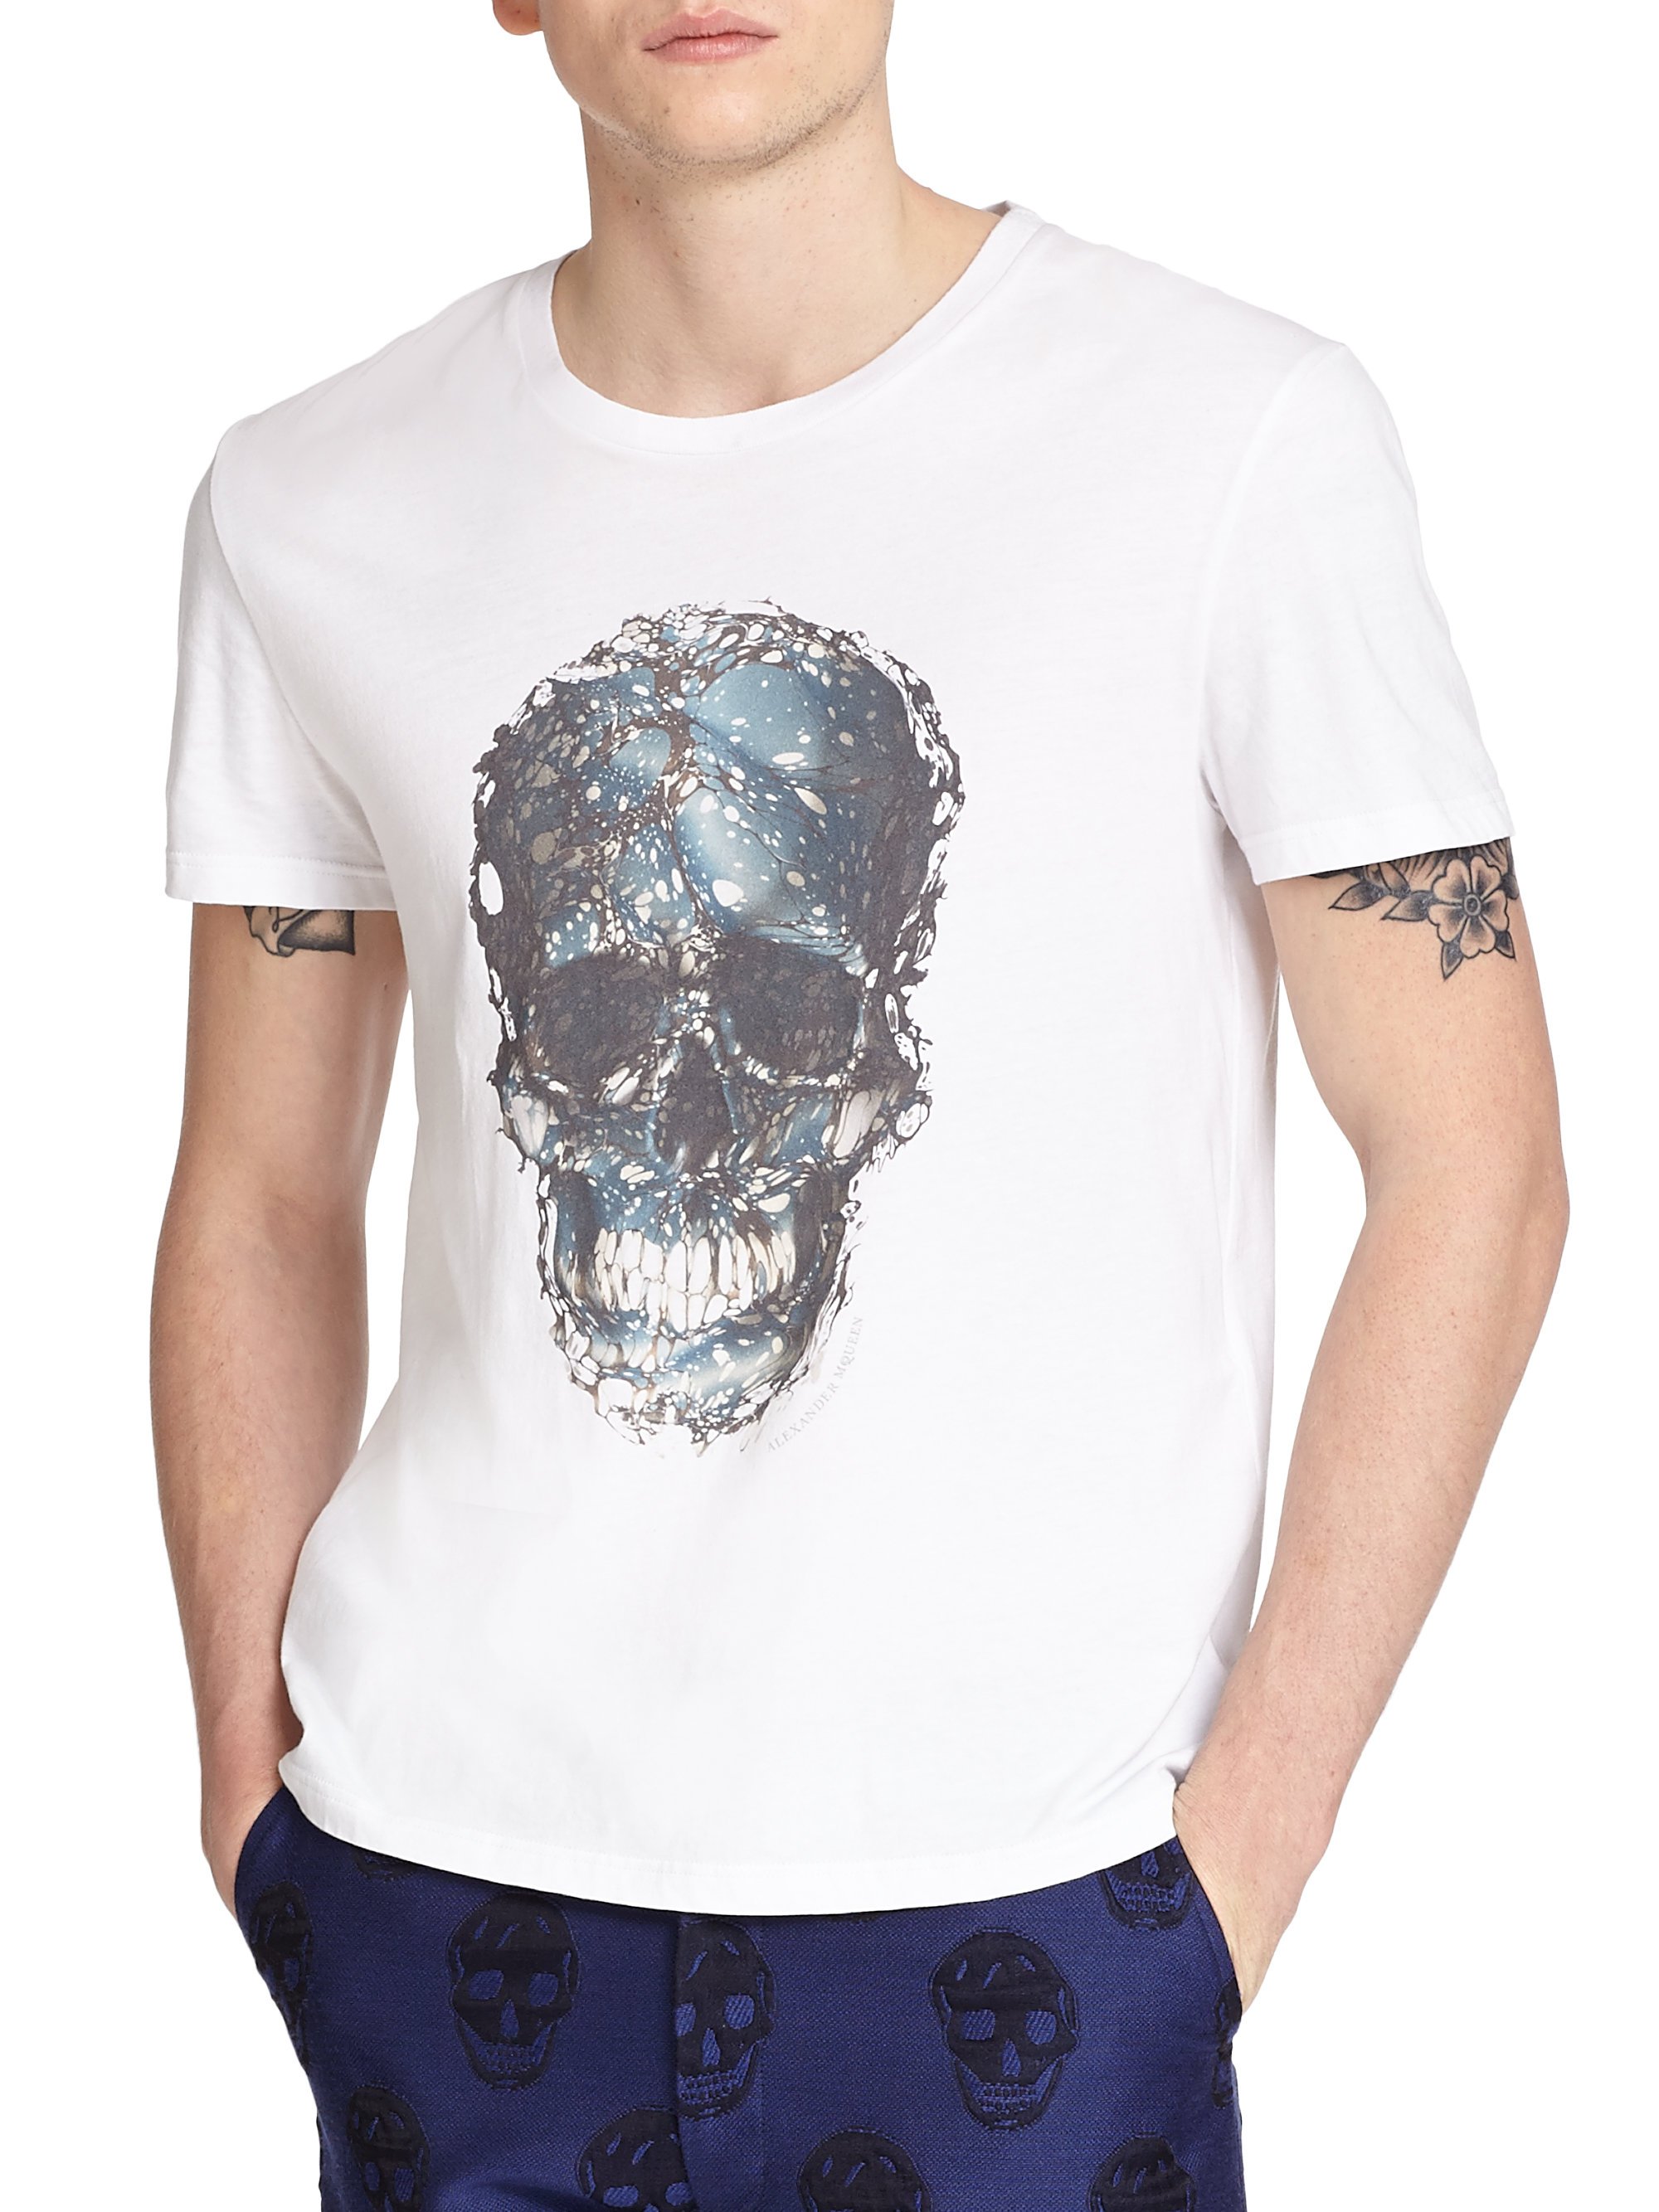 Alexander McQueen Skull Print Cotton Tee in White for Men - Lyst